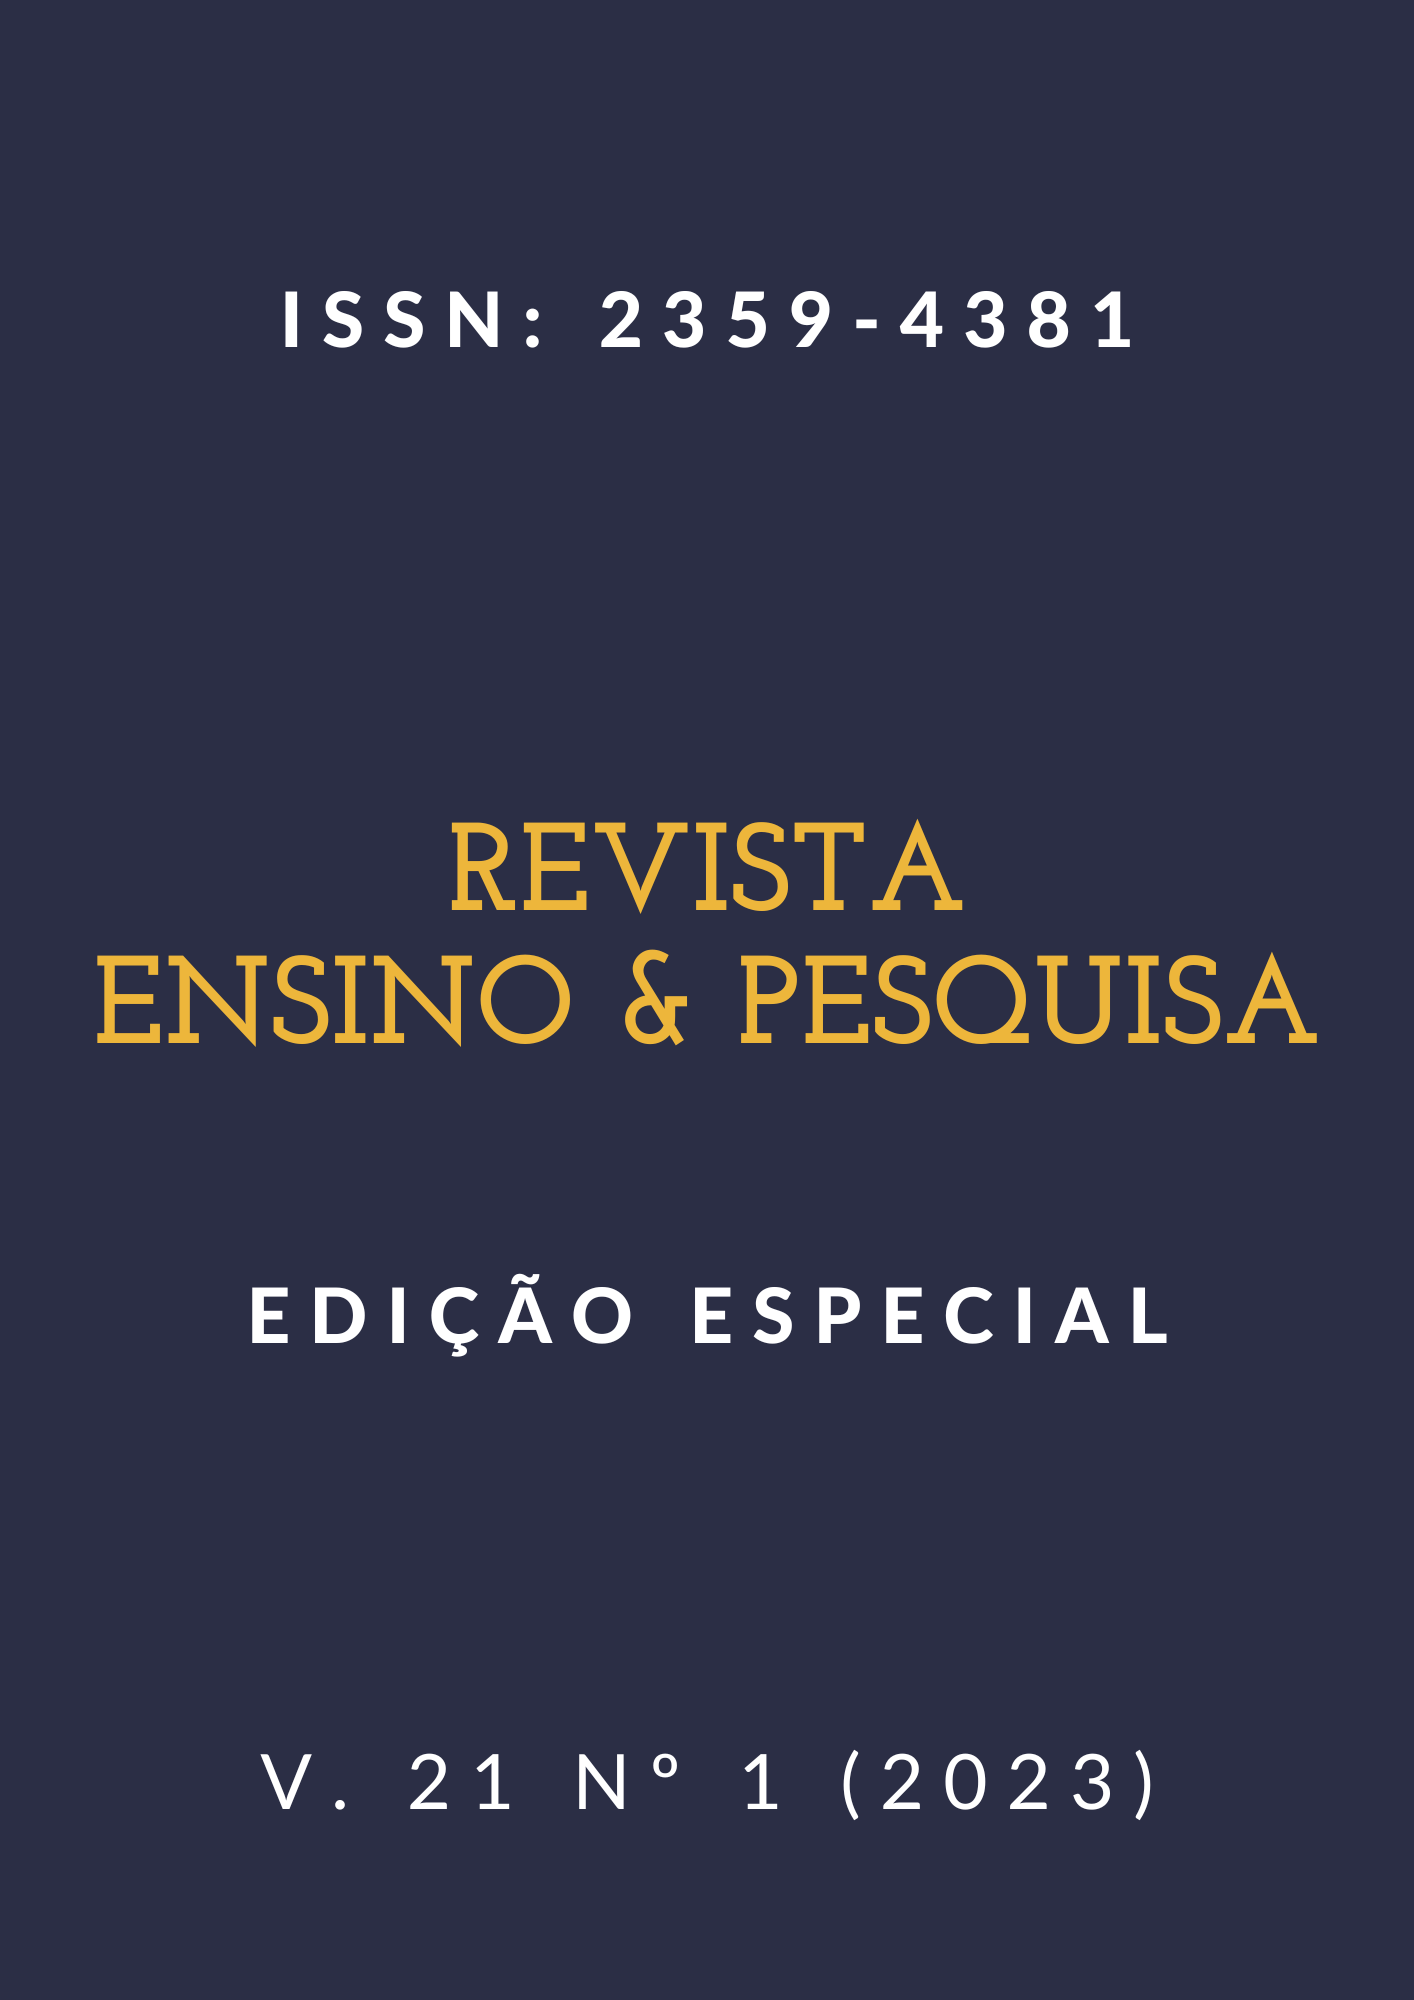 					View Vol. 21 No. 1 (2023): Ensino & Pesquisa
				